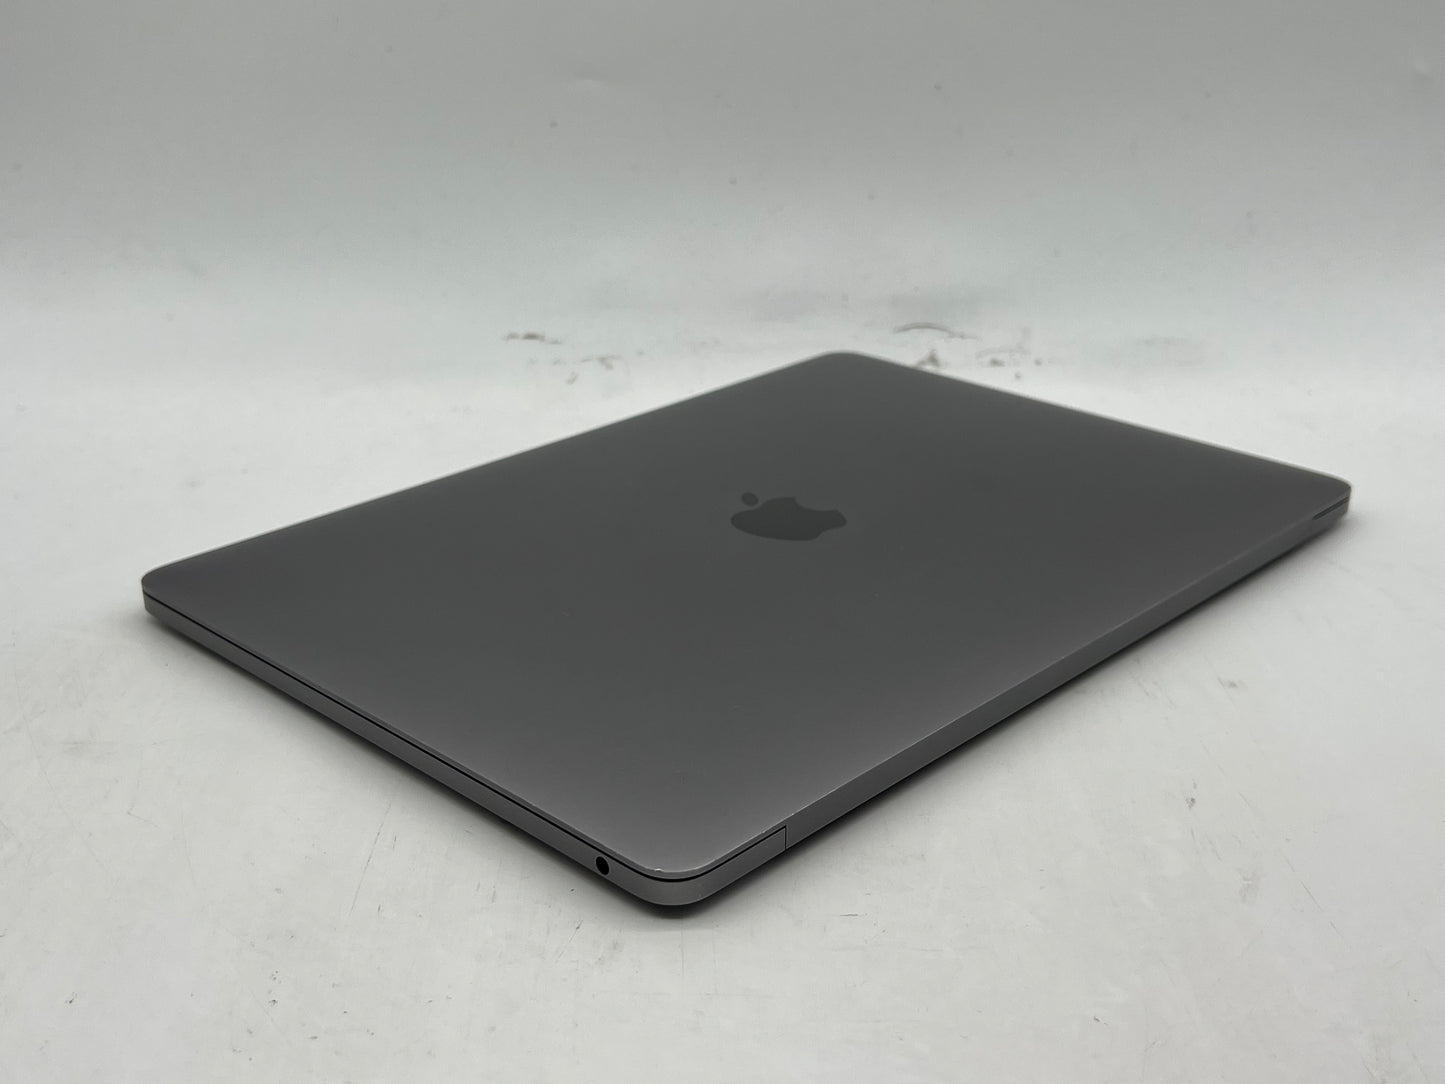 Apple 2019 MacBook Pro 13 in TB 1.4GHz Dual-Core i5 16GB RAM 256GB SSD IIPG 645